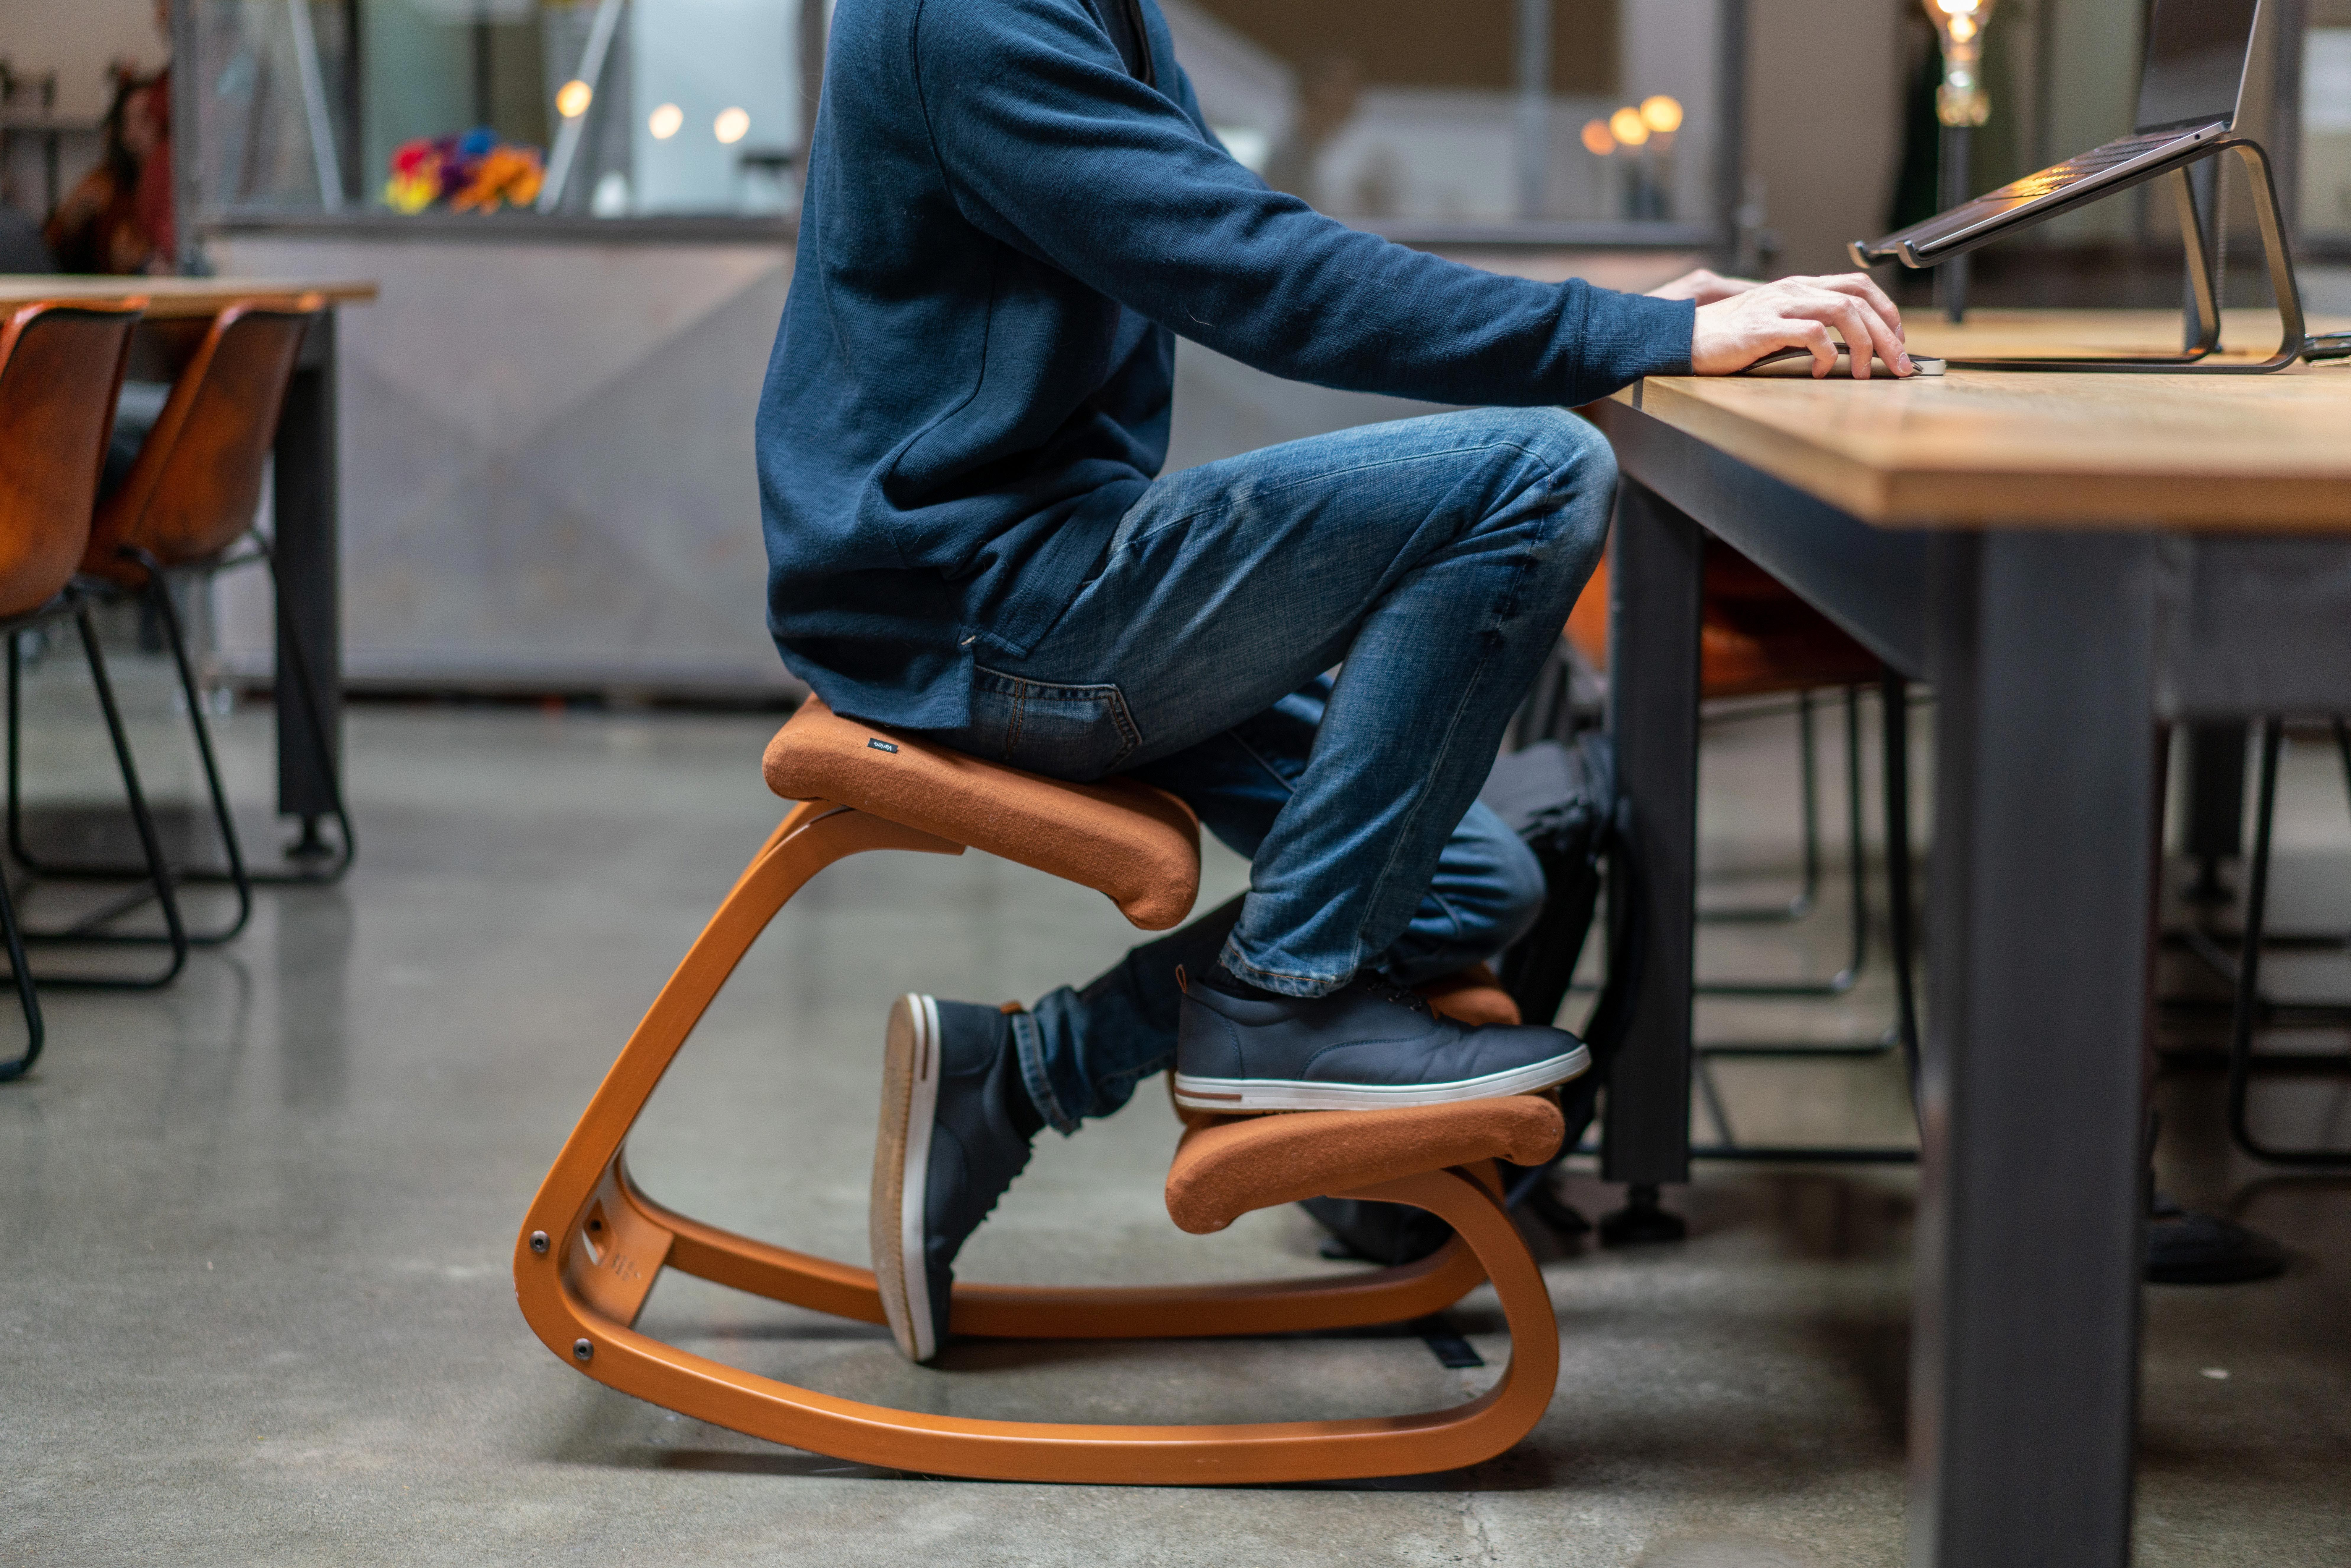 Variable Balans Original Kneeling Chair Ergonomic Kneeling Chair Posture Office Orthopedic Chairs Ergo Knee Stool for Work Desk with Height Adjustment Brake Casters 